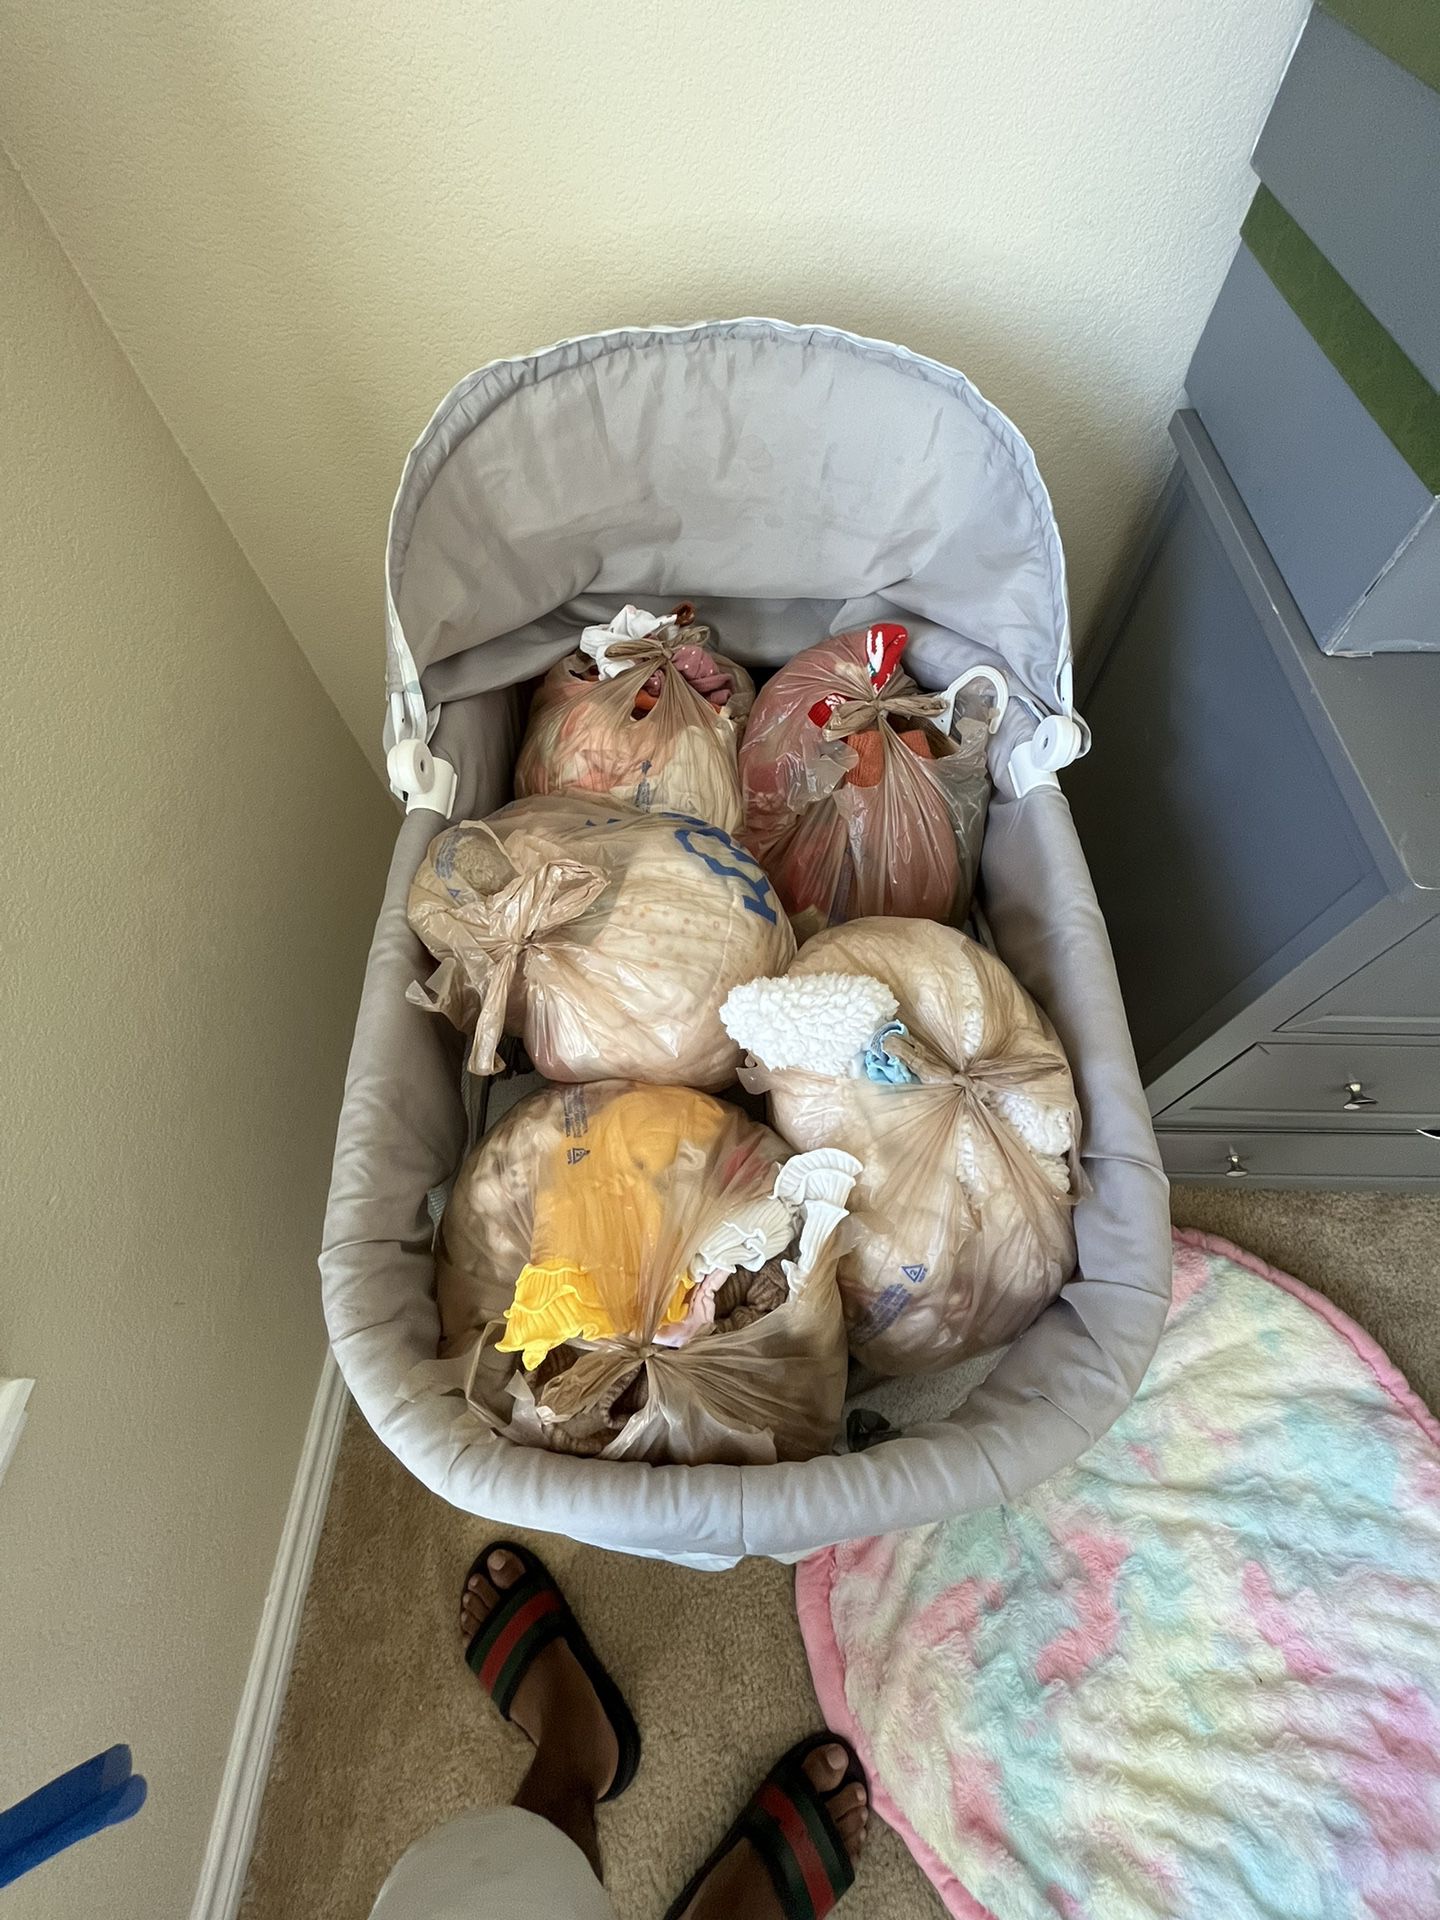 Baby crib / bassinet & 1-3 months girls clothes 